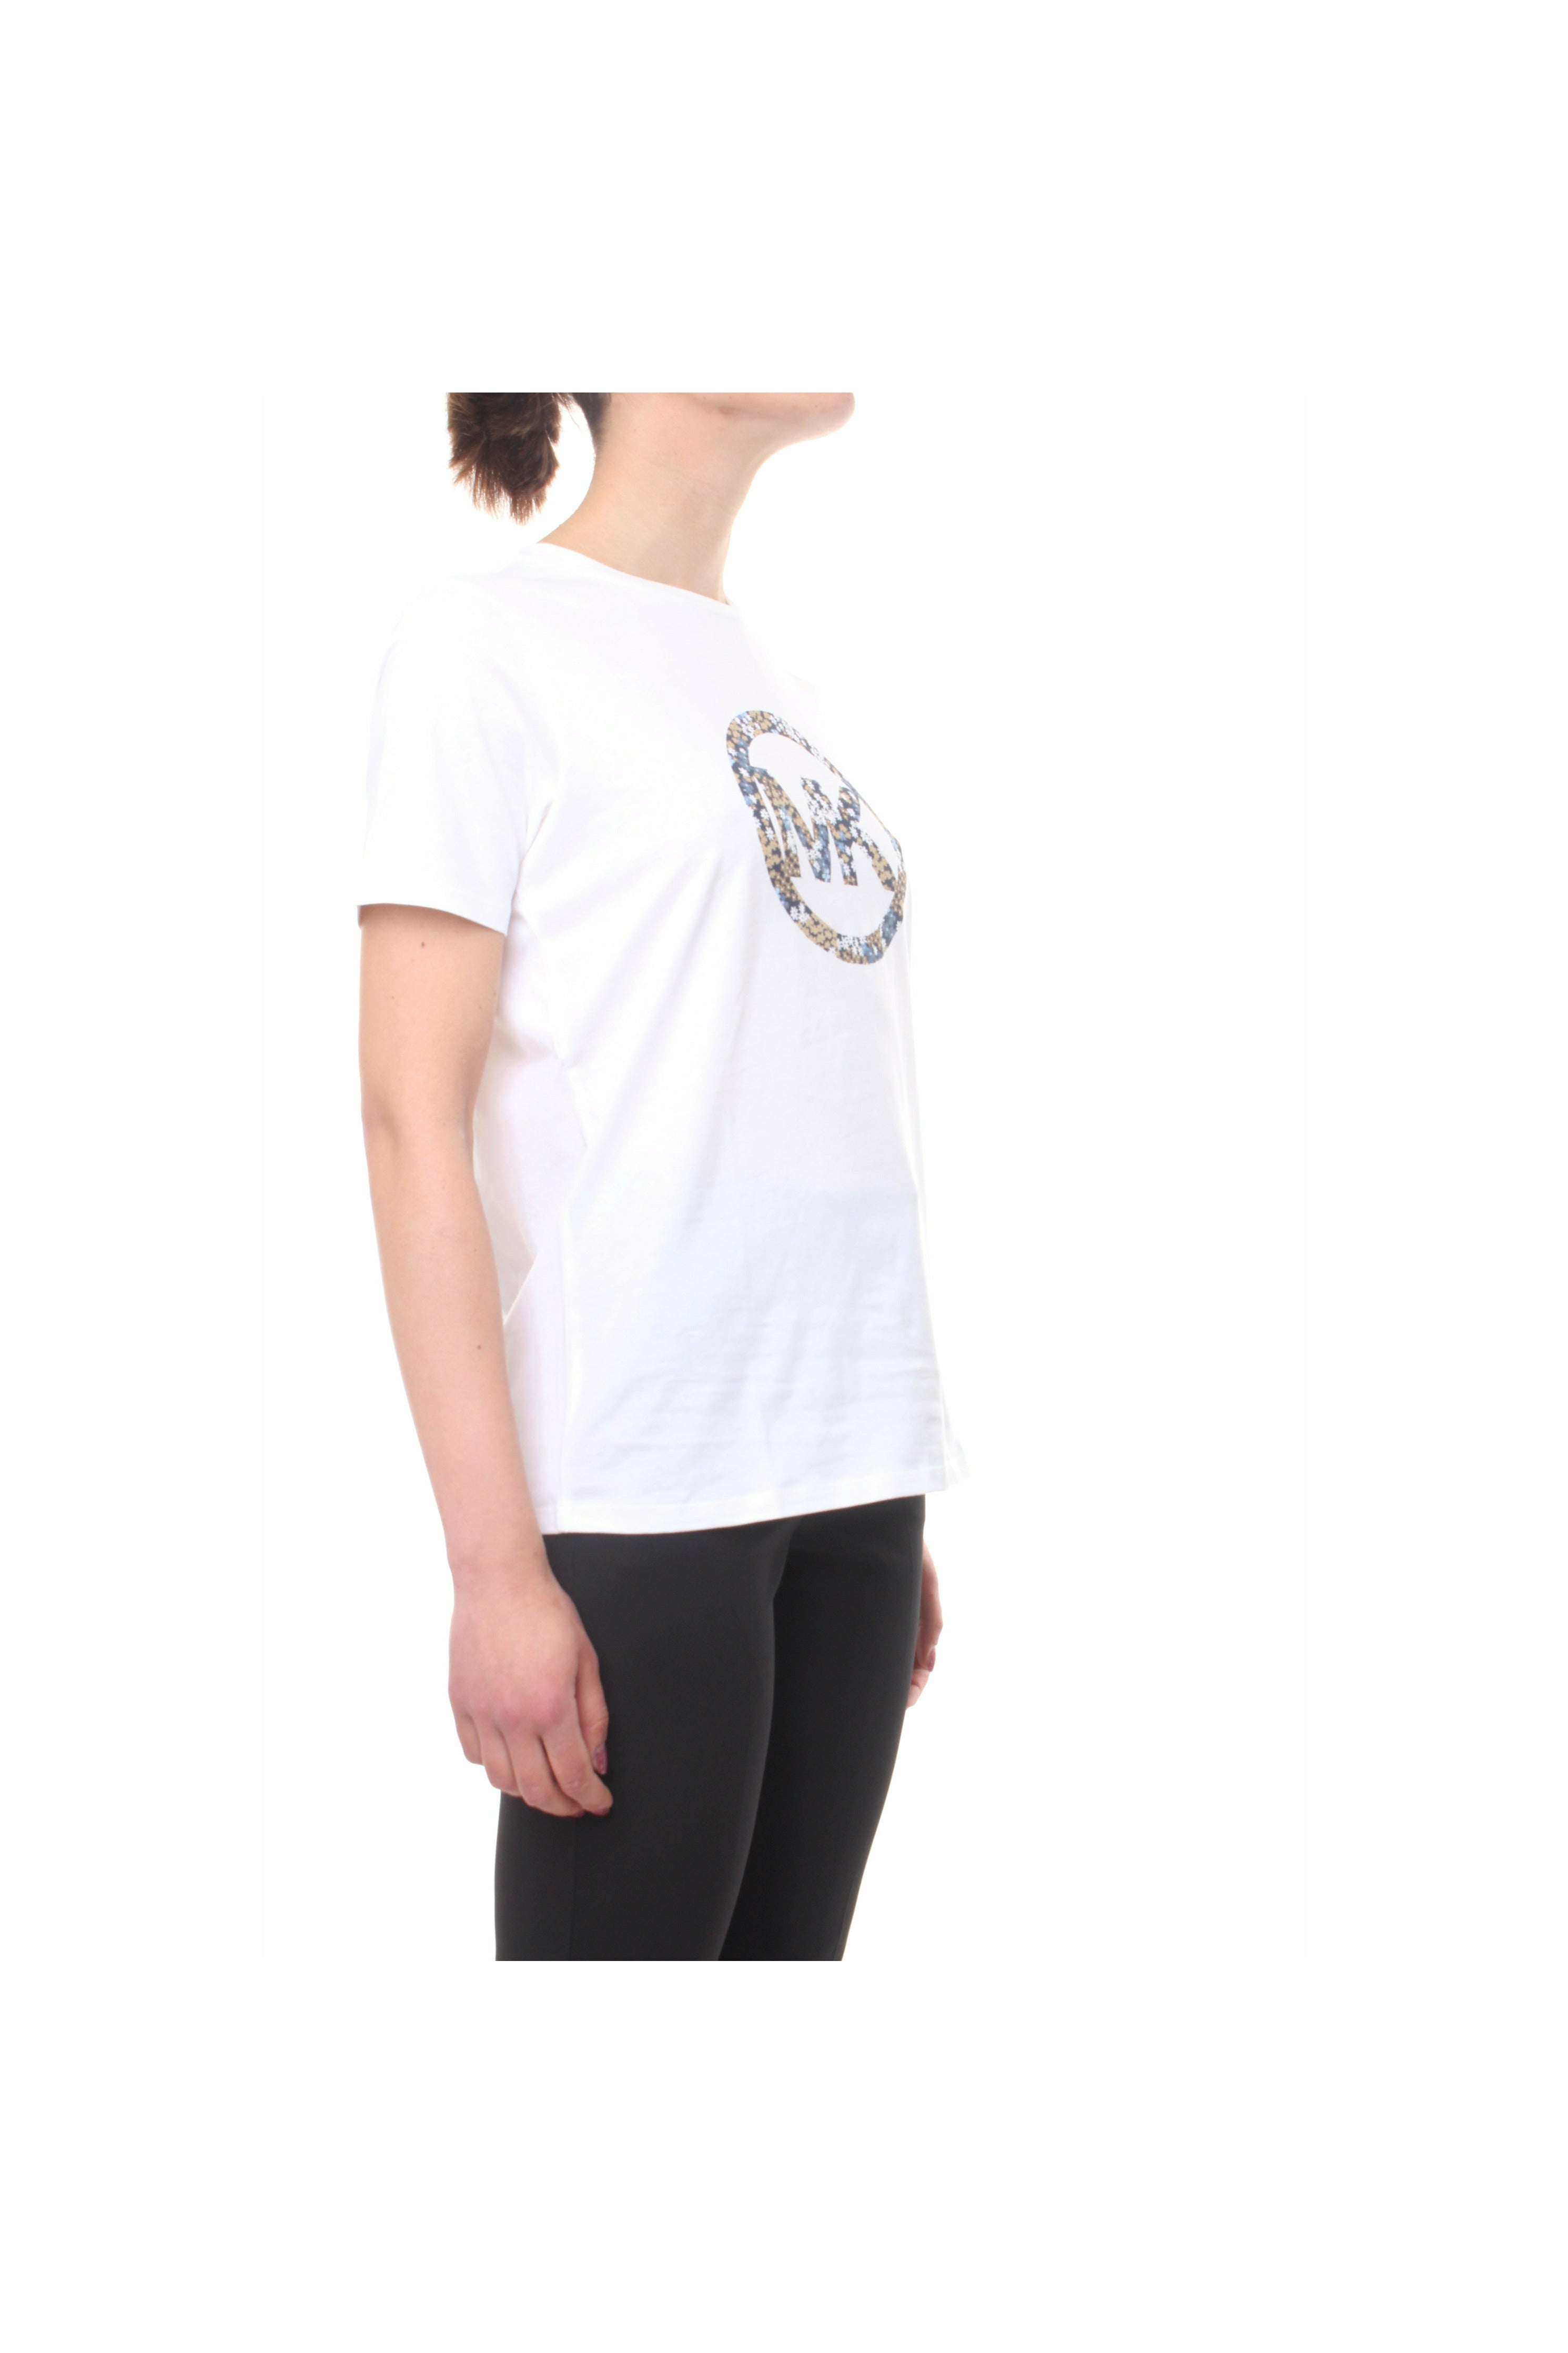 MICHAELKORS MB950PY97J t-shirt manica corta con logo floreale stampato